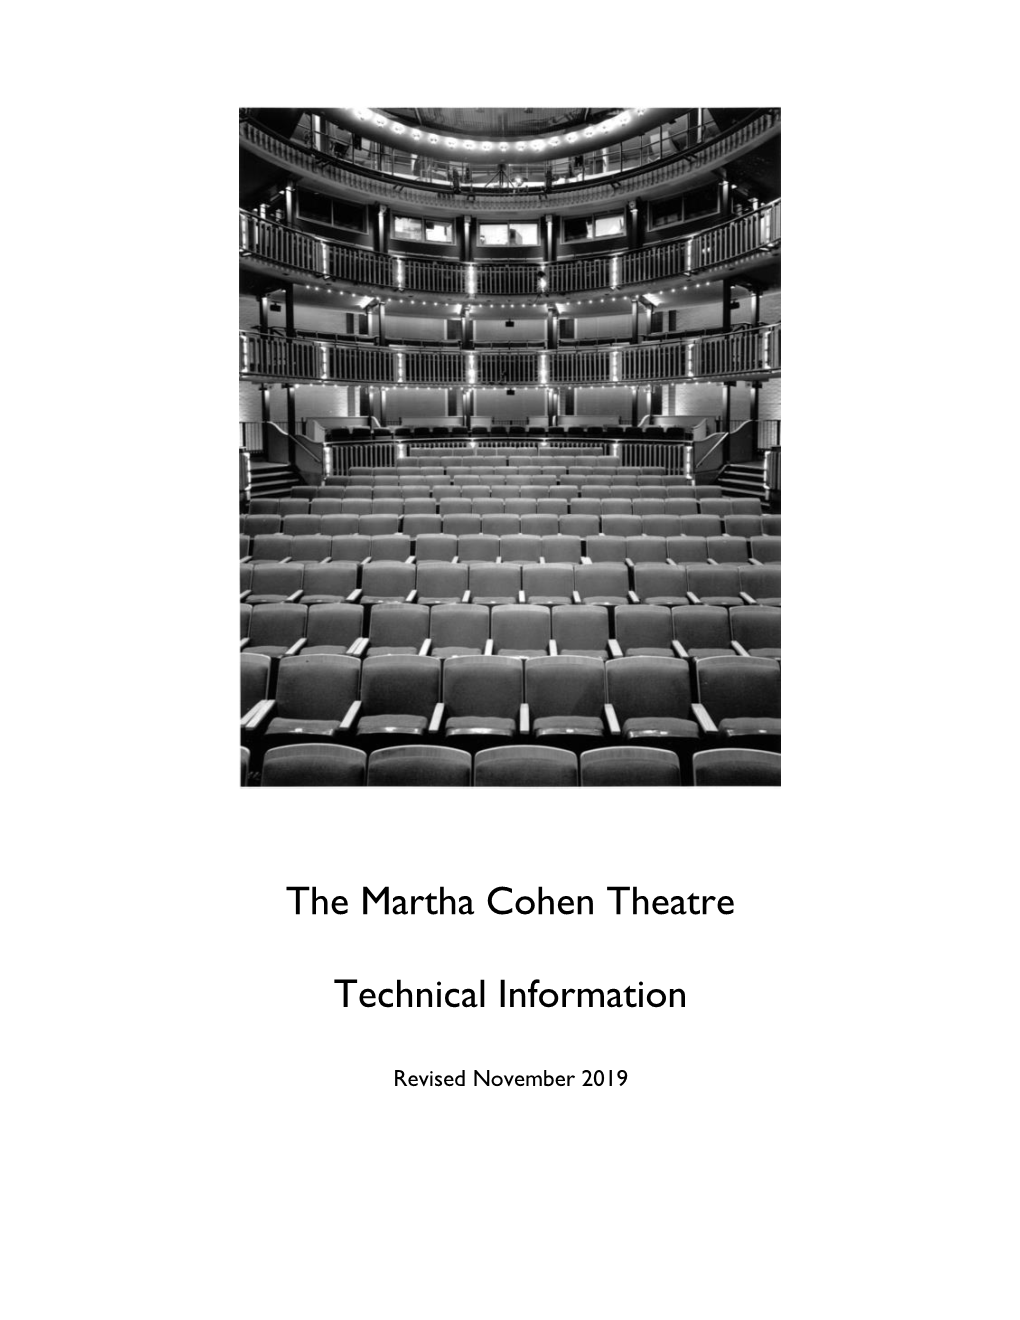 The Martha Cohen Theatre Technical Information